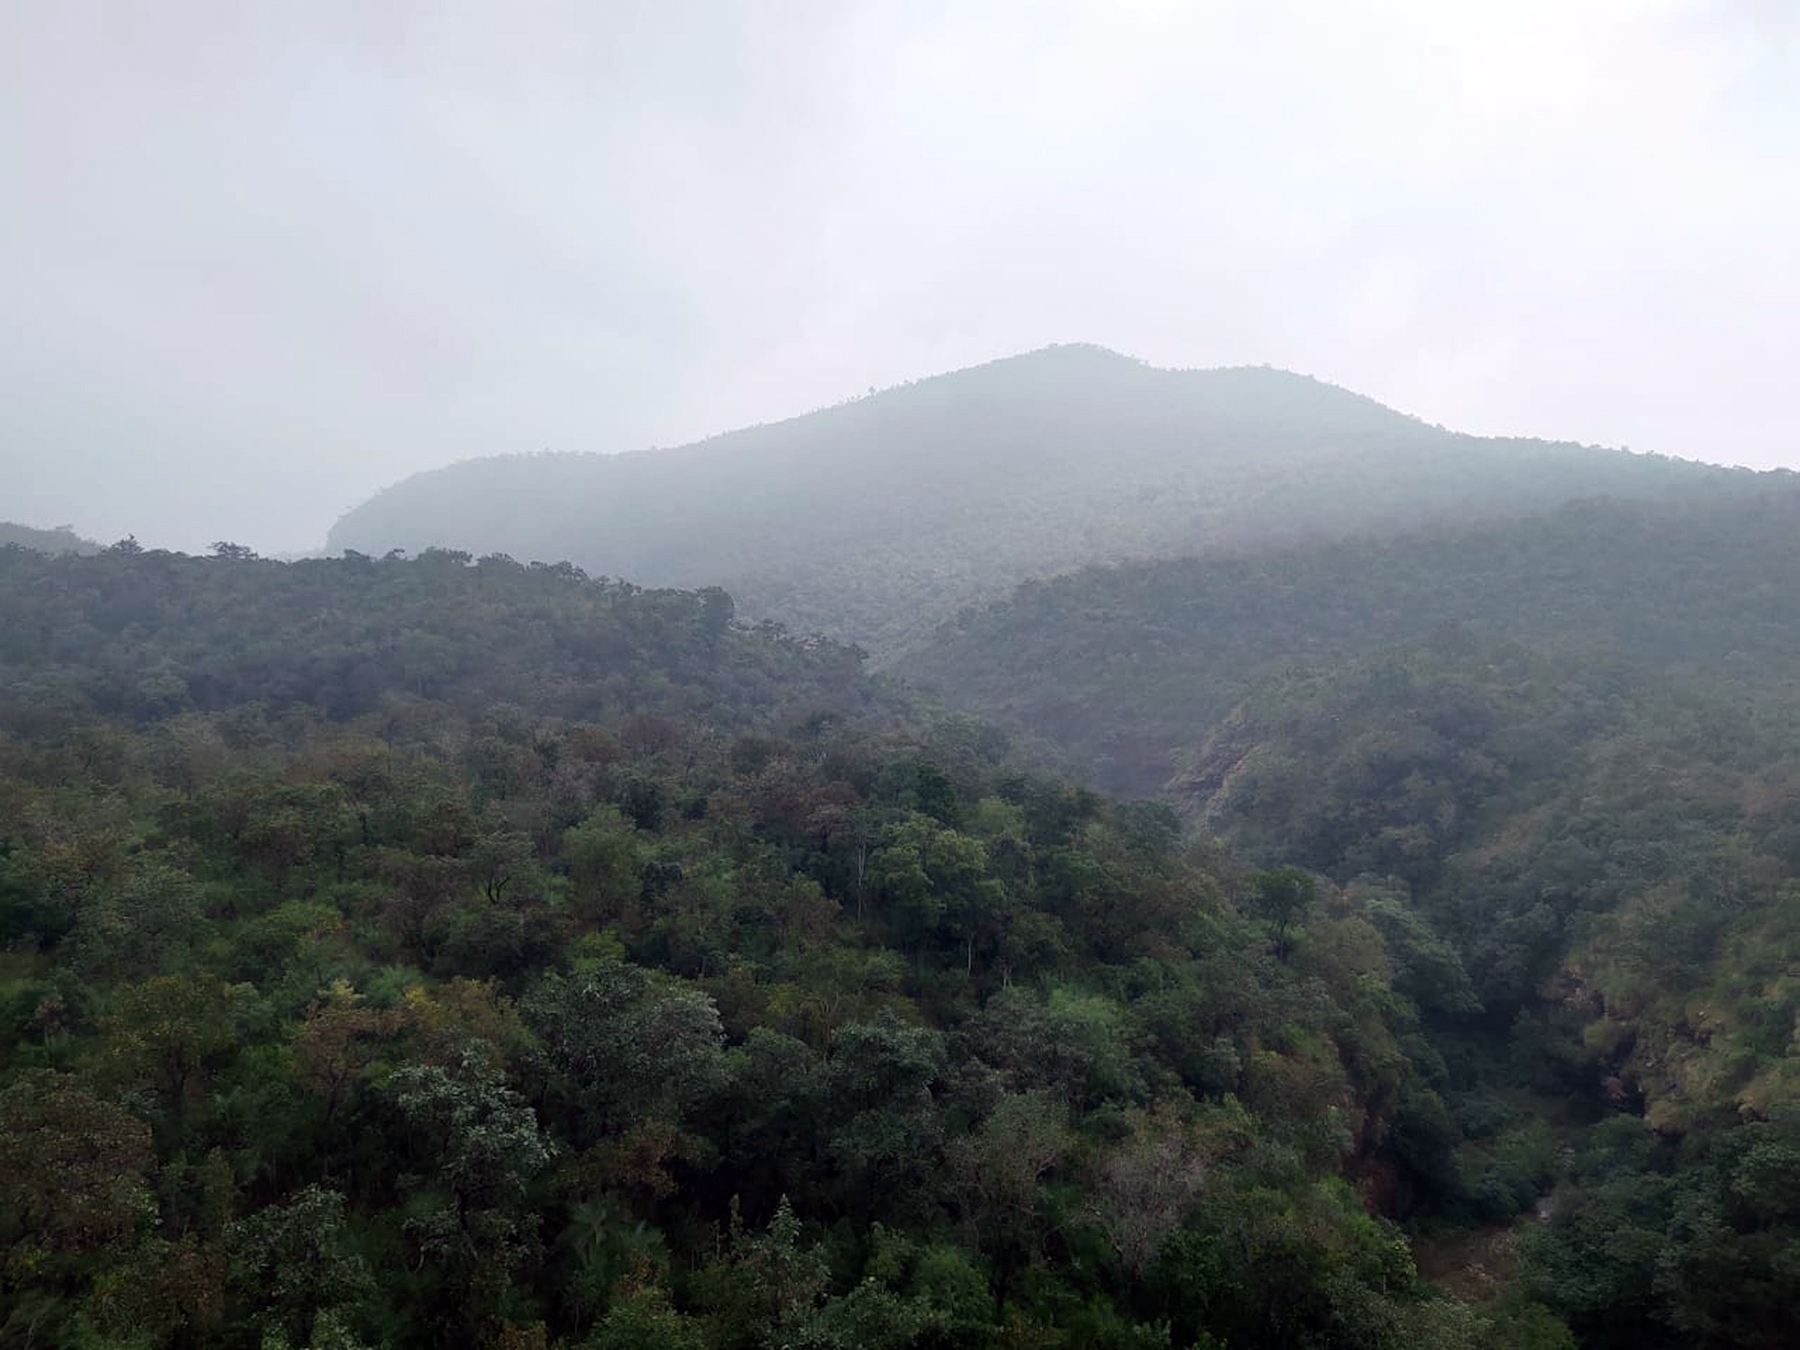 Invasive plant species wreaks havoc in hills home to Tirupati Lord Balaji